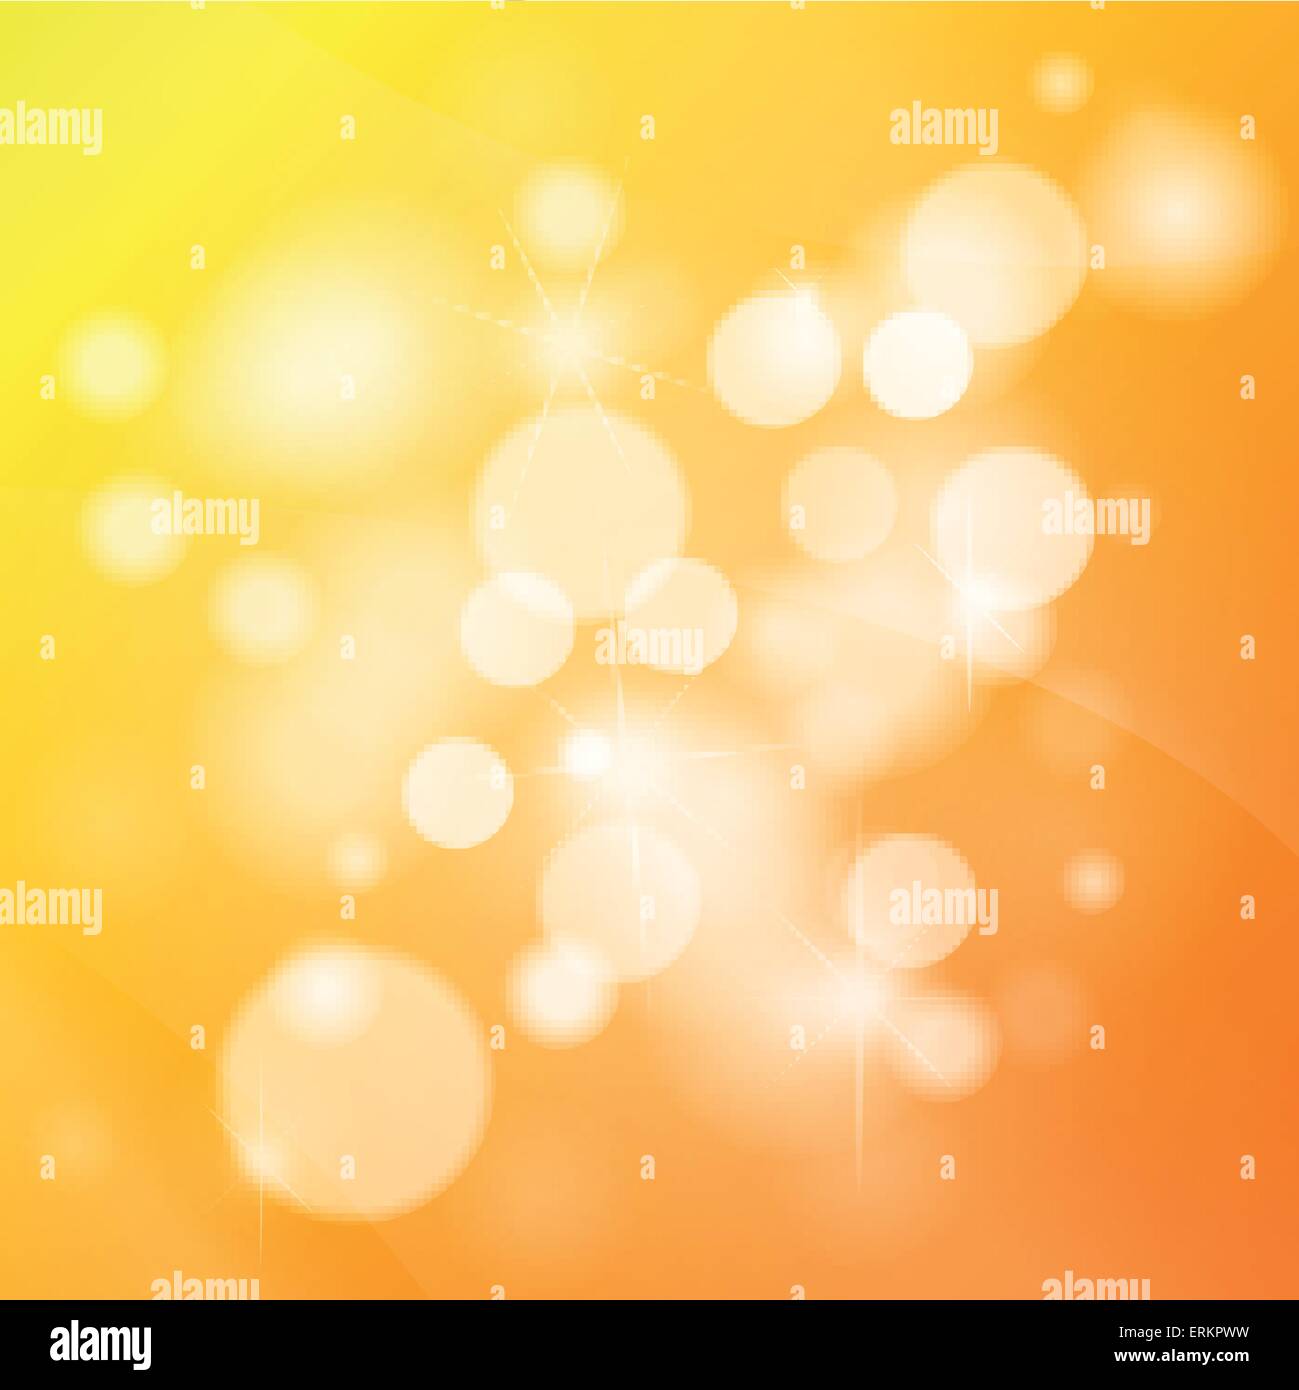 Sunshine yellow orange Stock Vector Images - Alamy